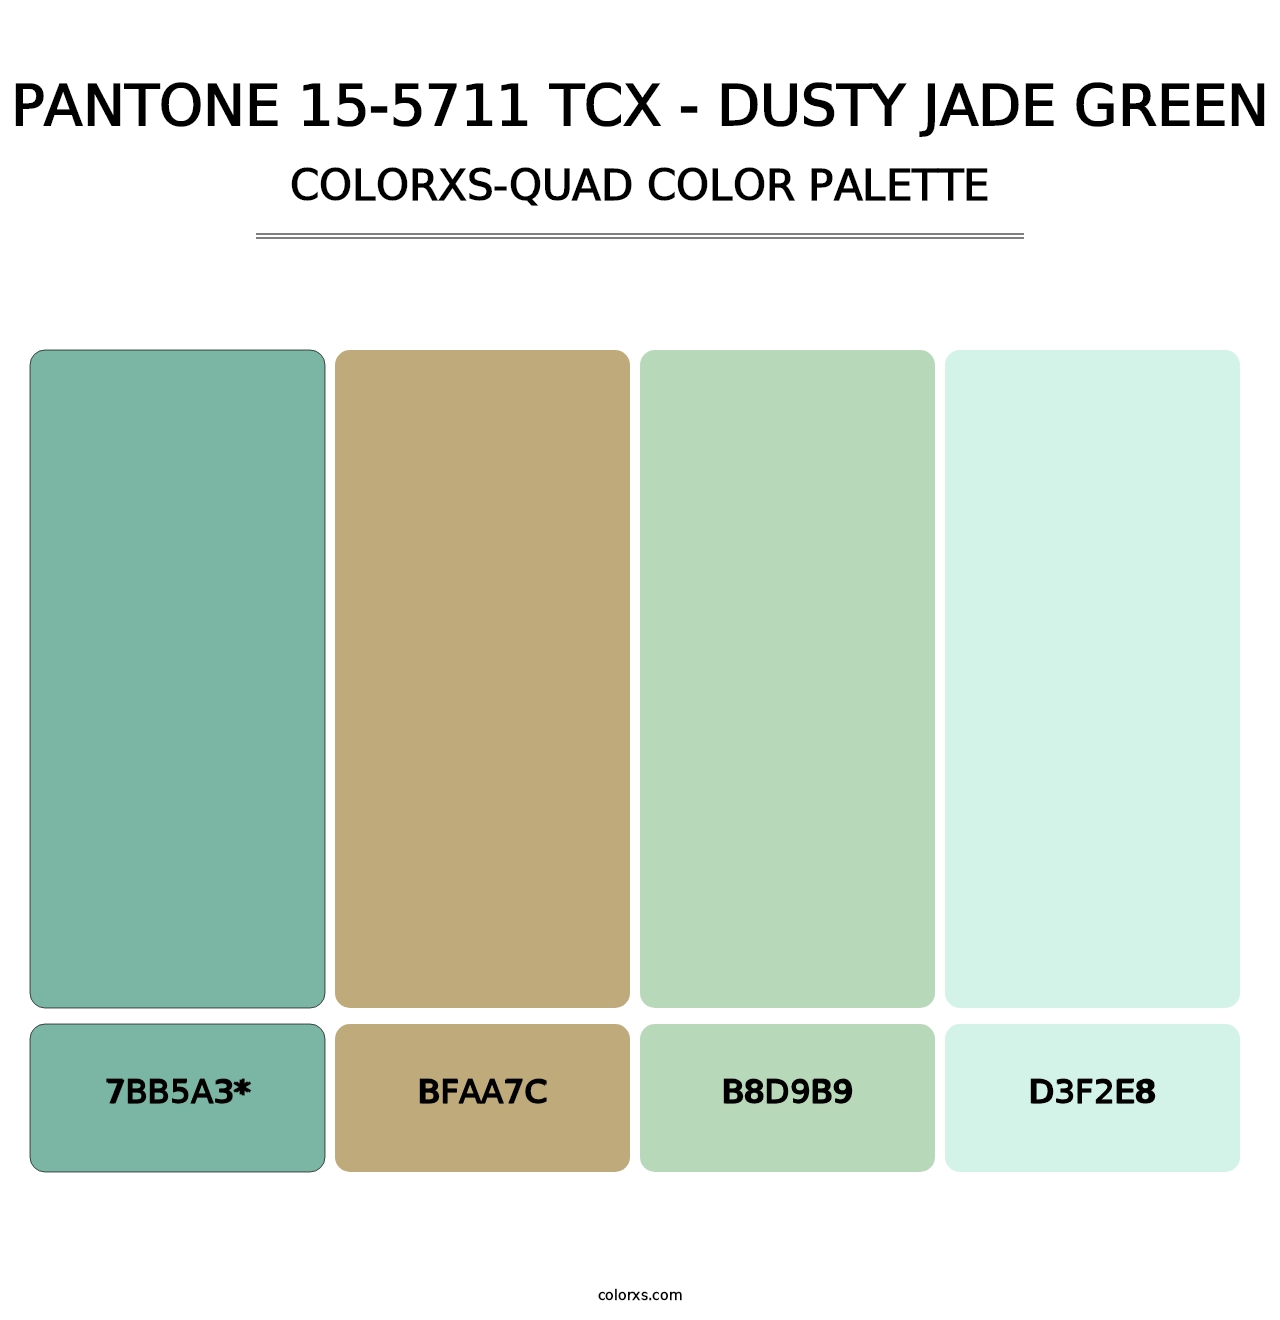 PANTONE 15-5711 TCX - Dusty Jade Green - Colorxs Quad Palette